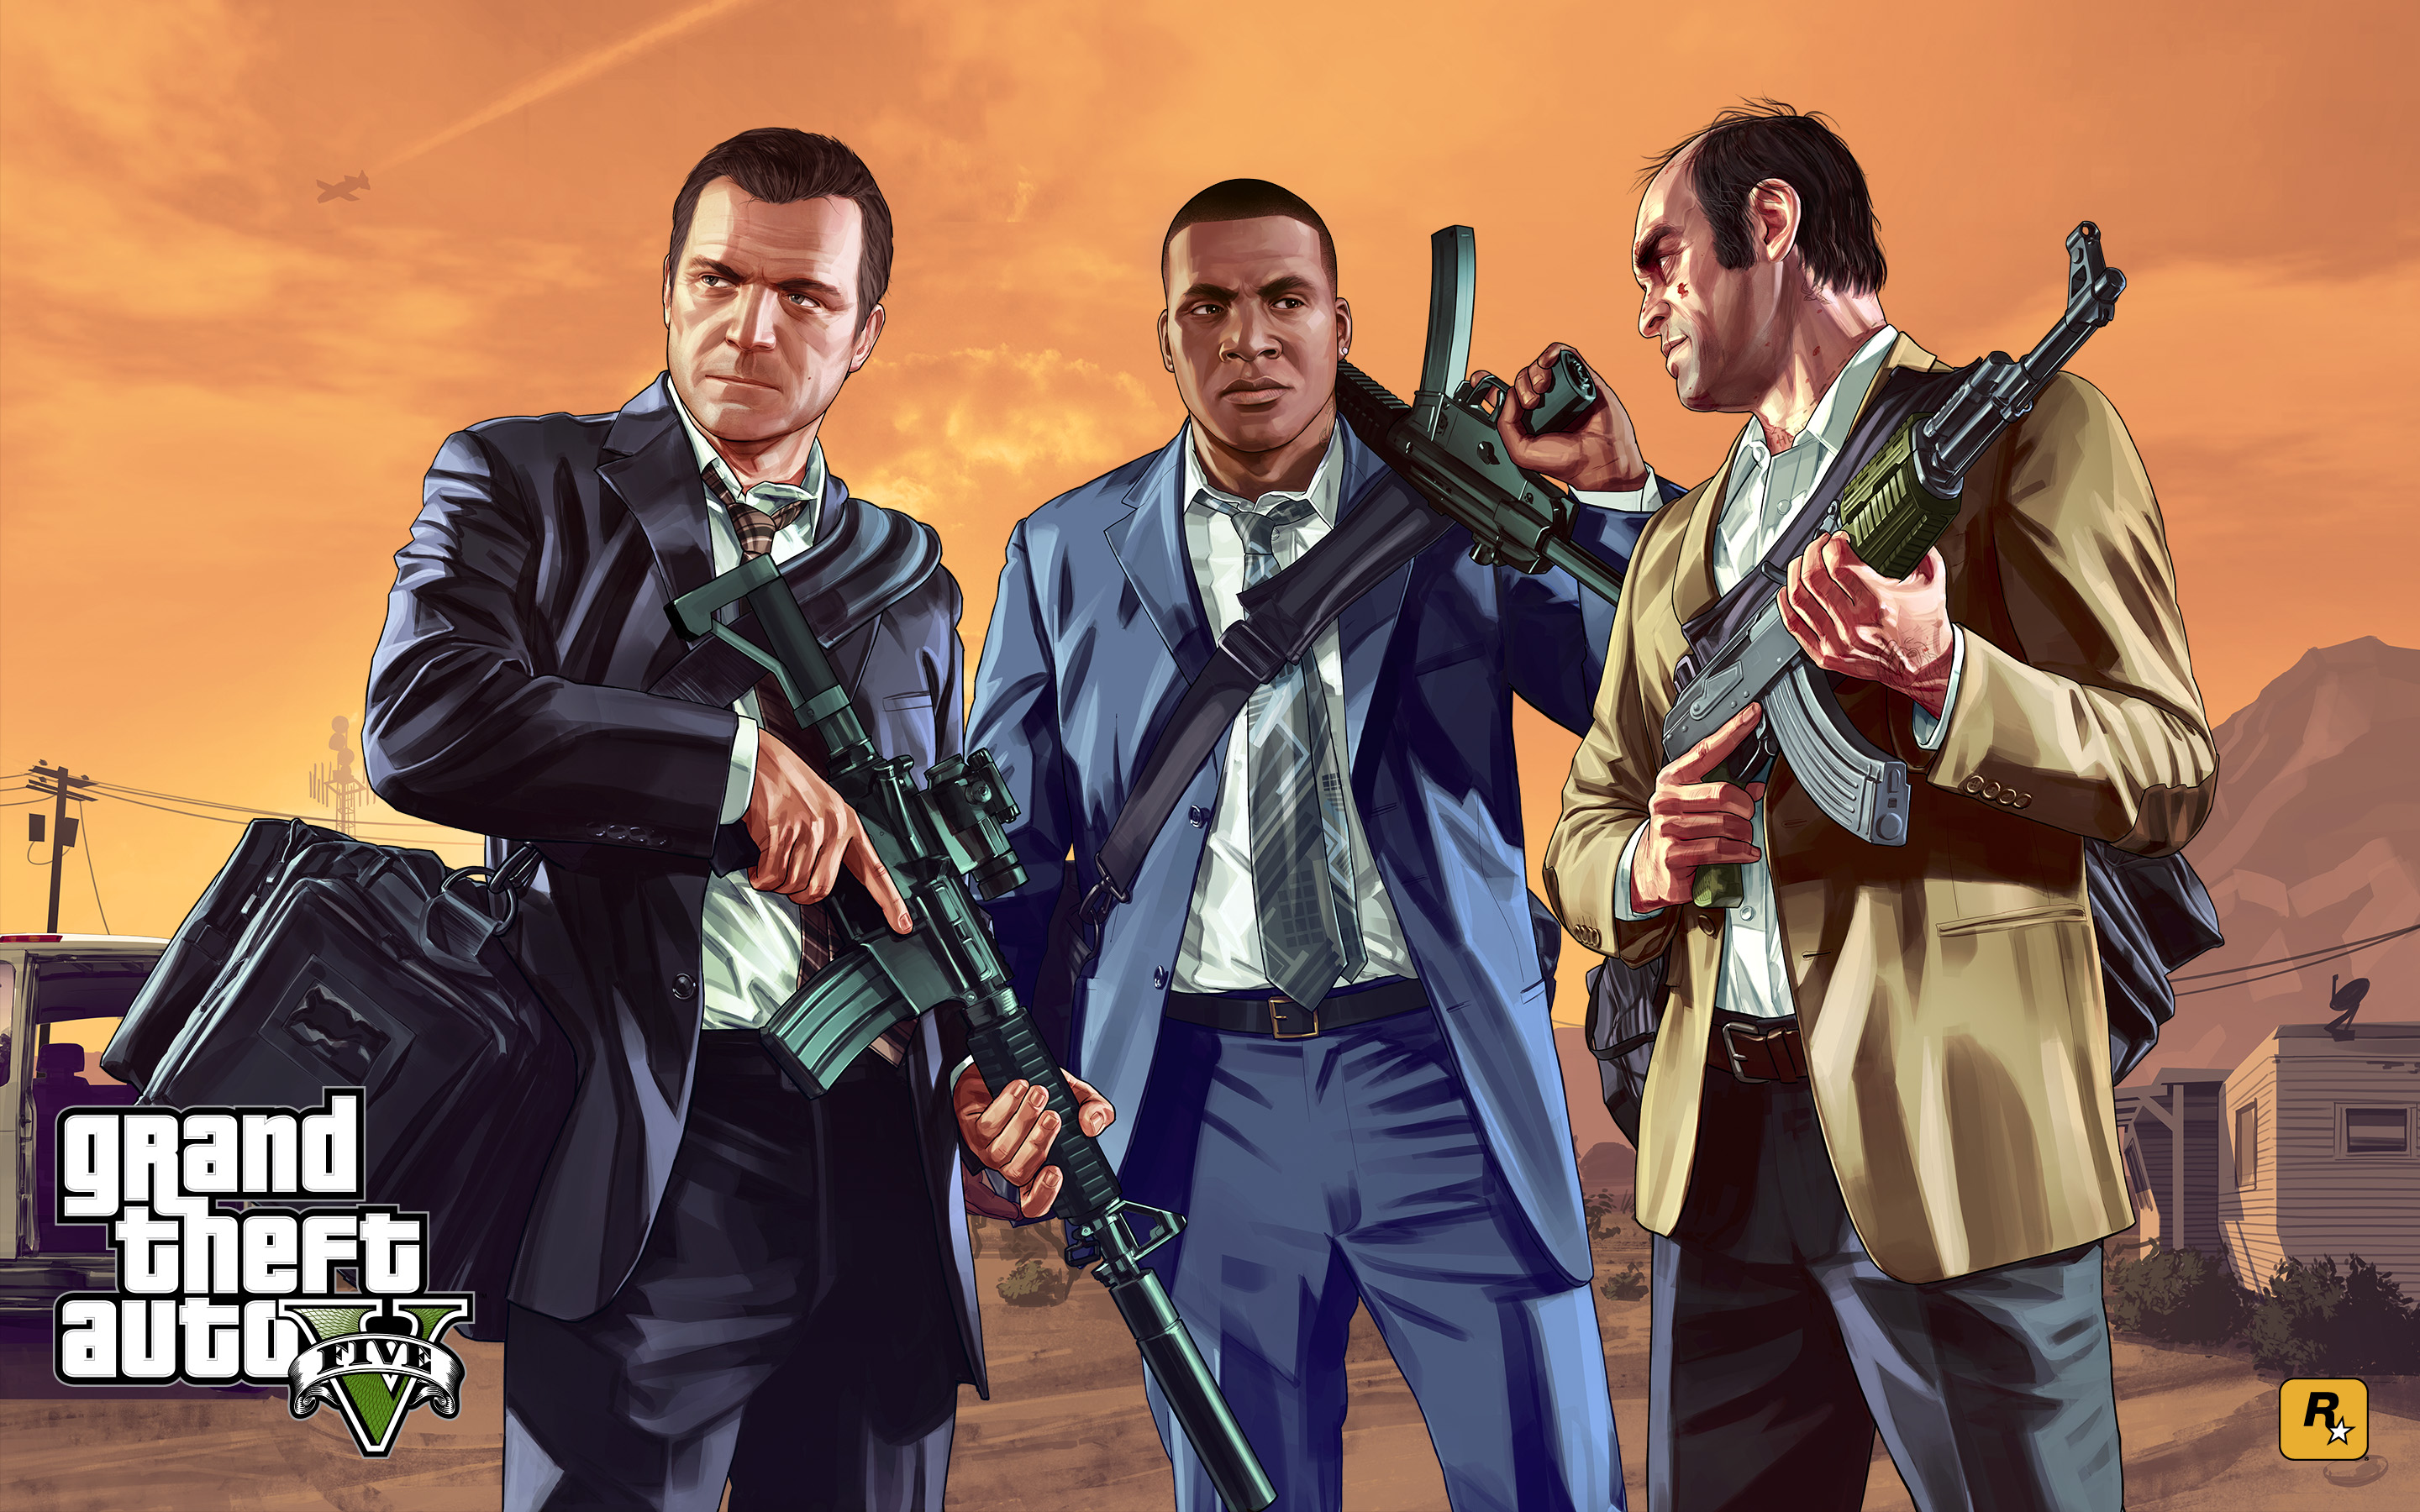 [Rumor] Grand Theft Auto V on development for Nintendo Switch